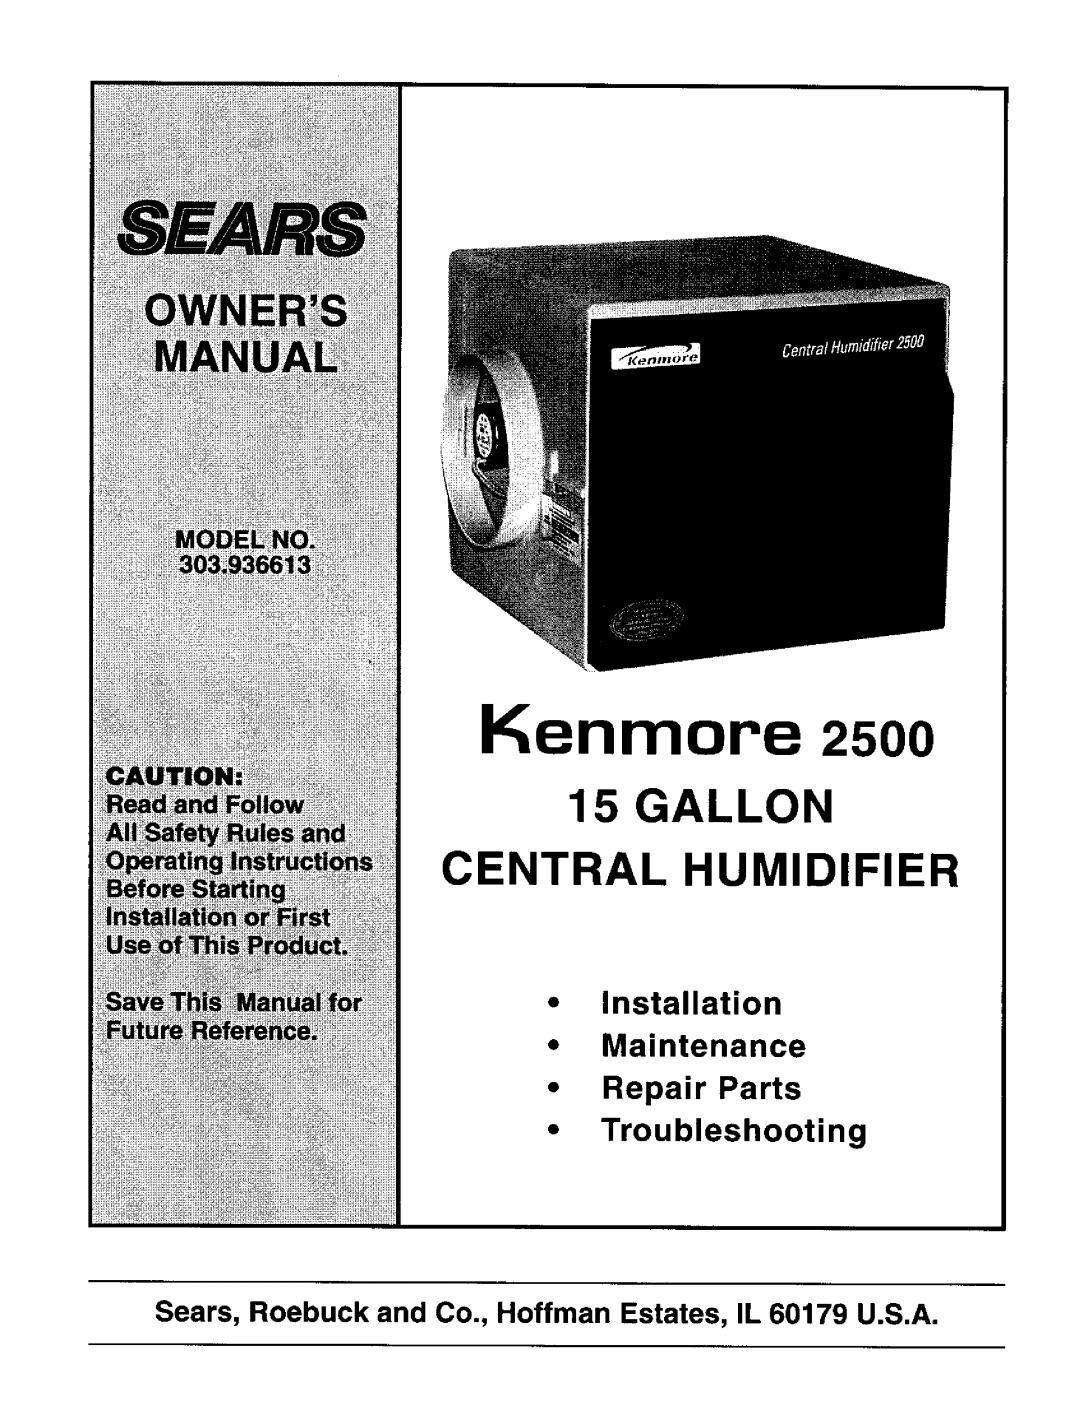 Sears 2500 manual Kenmore, Installation Maintenance Repair Parts Troubleshooting 